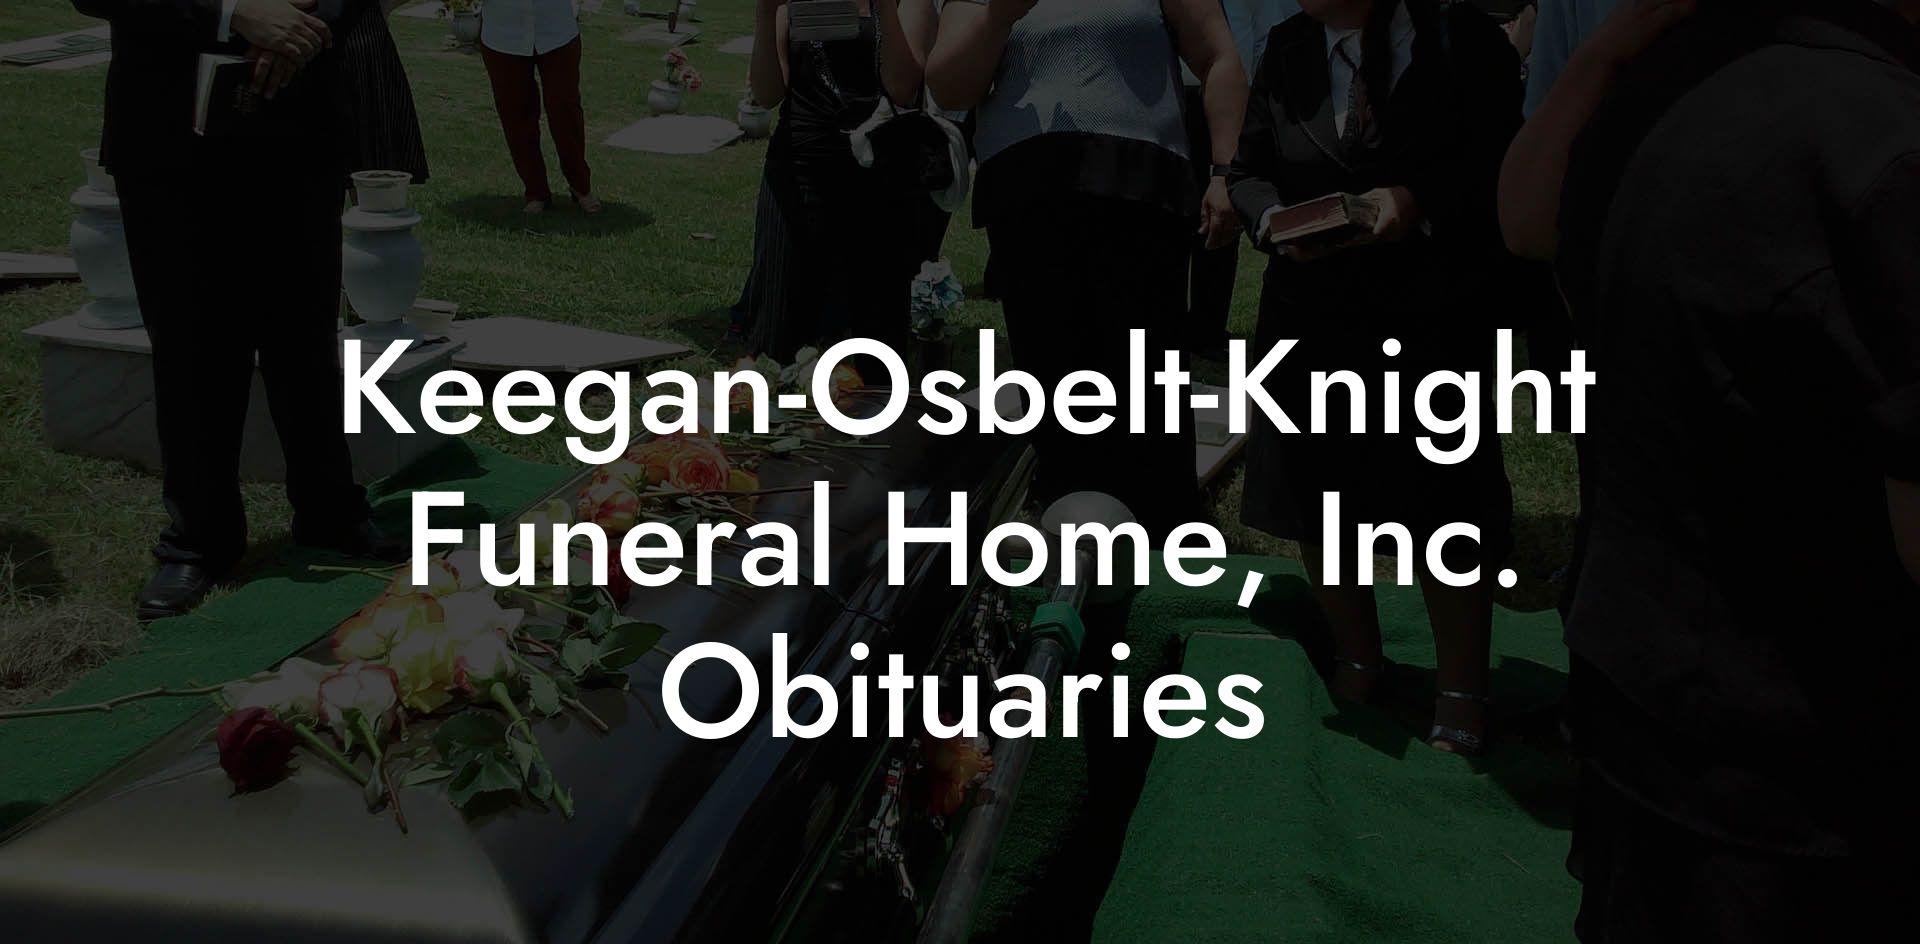 Keegan-Osbelt-Knight Funeral Home, Inc. Obituaries